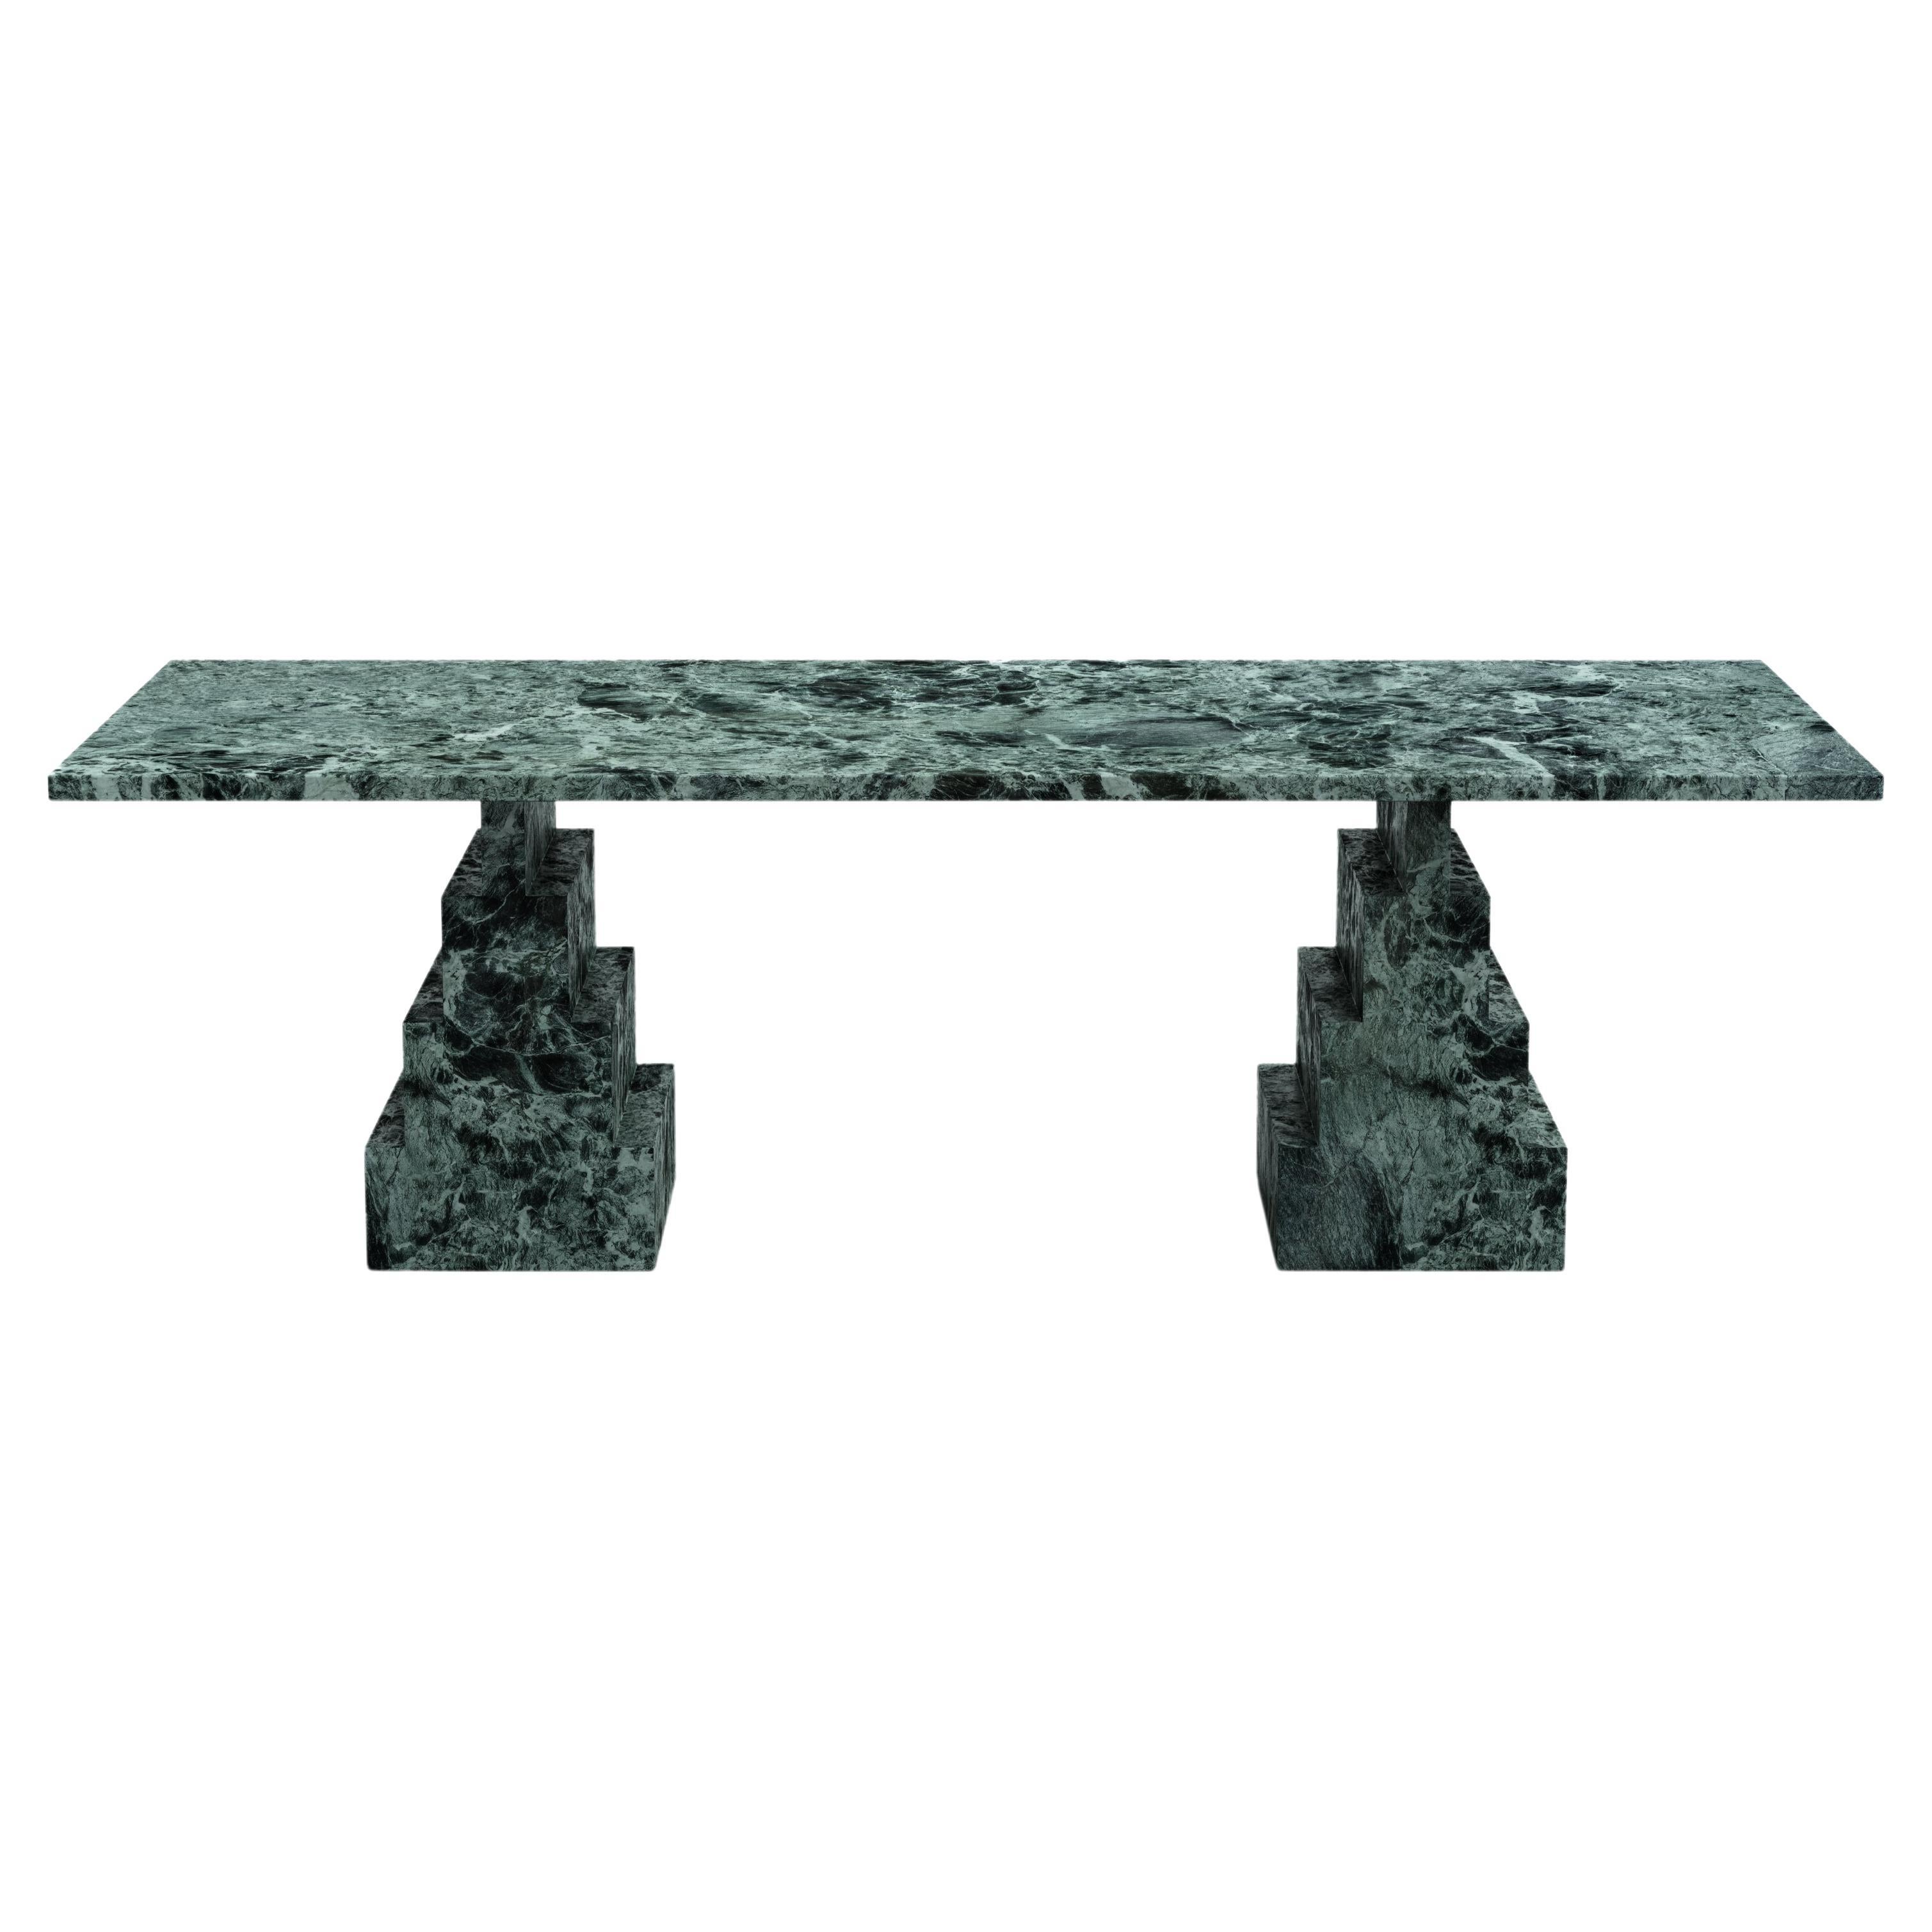 NORDST NIKO Dining Table, Italian Green Marble, Danish Modern Design For Sale